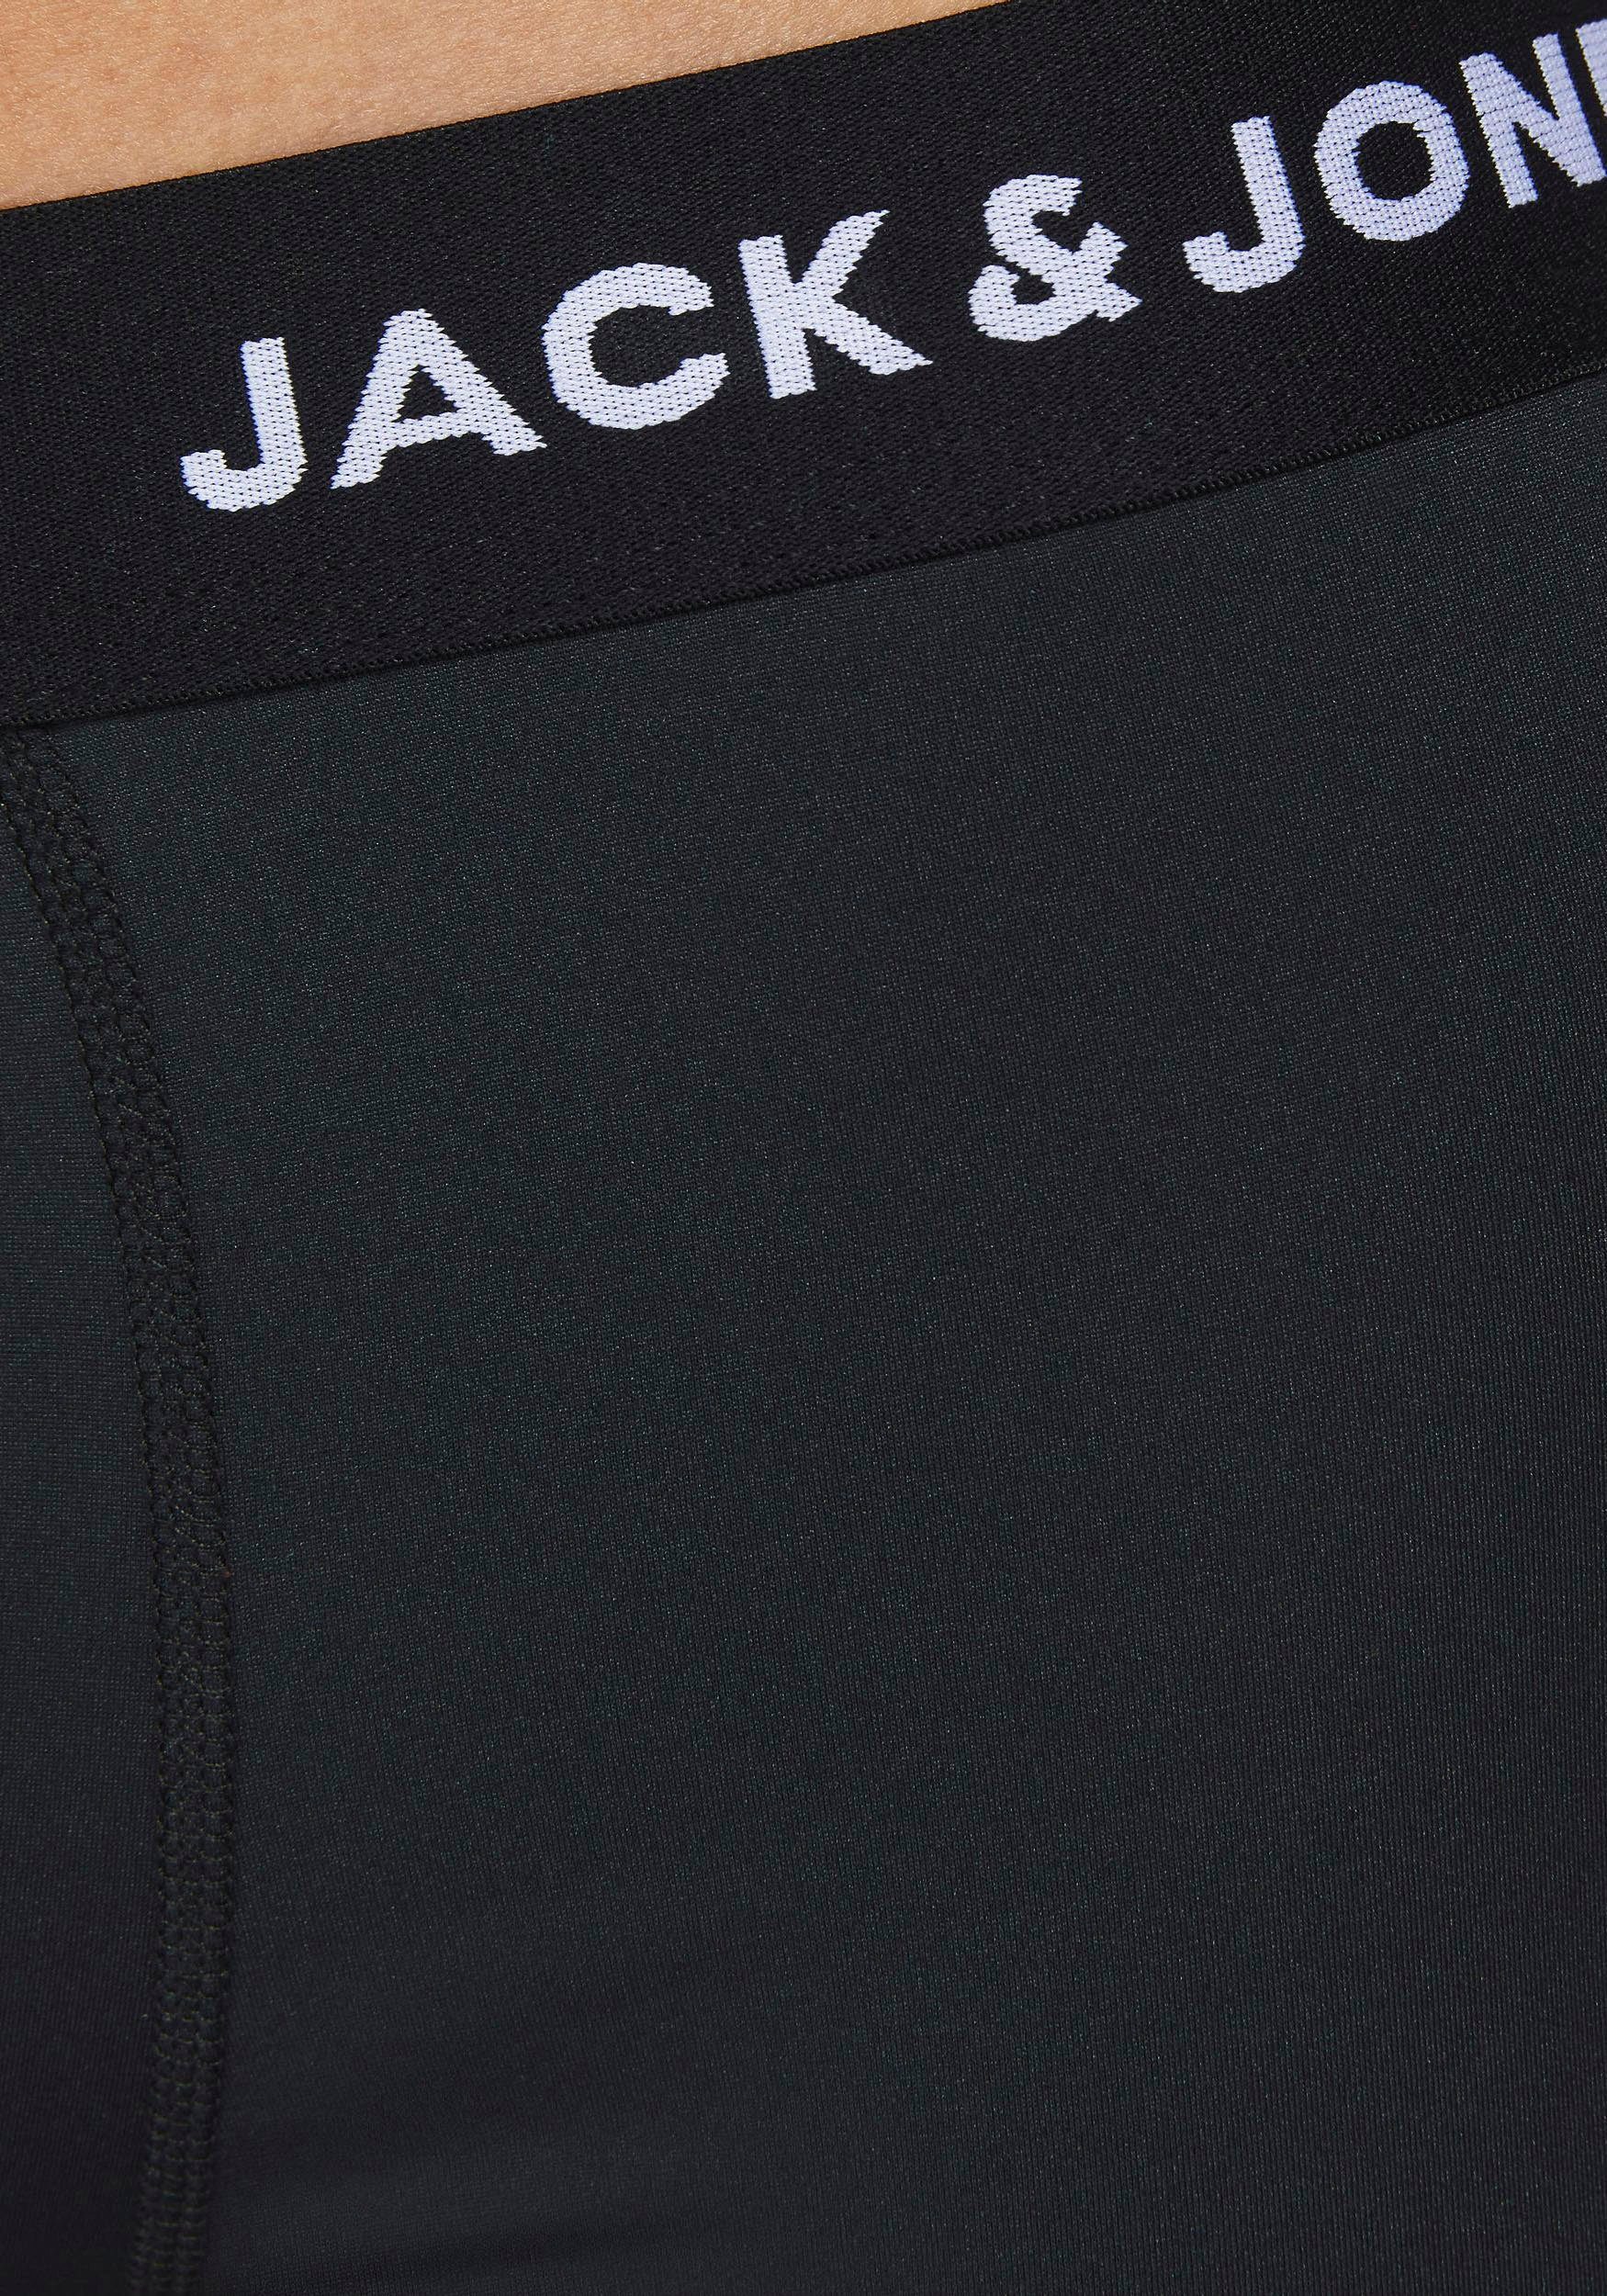 & JACBASE TRUNK 3-St., Jack Jones Boxershorts (Packung, 3er-Pack) MICROFIBER